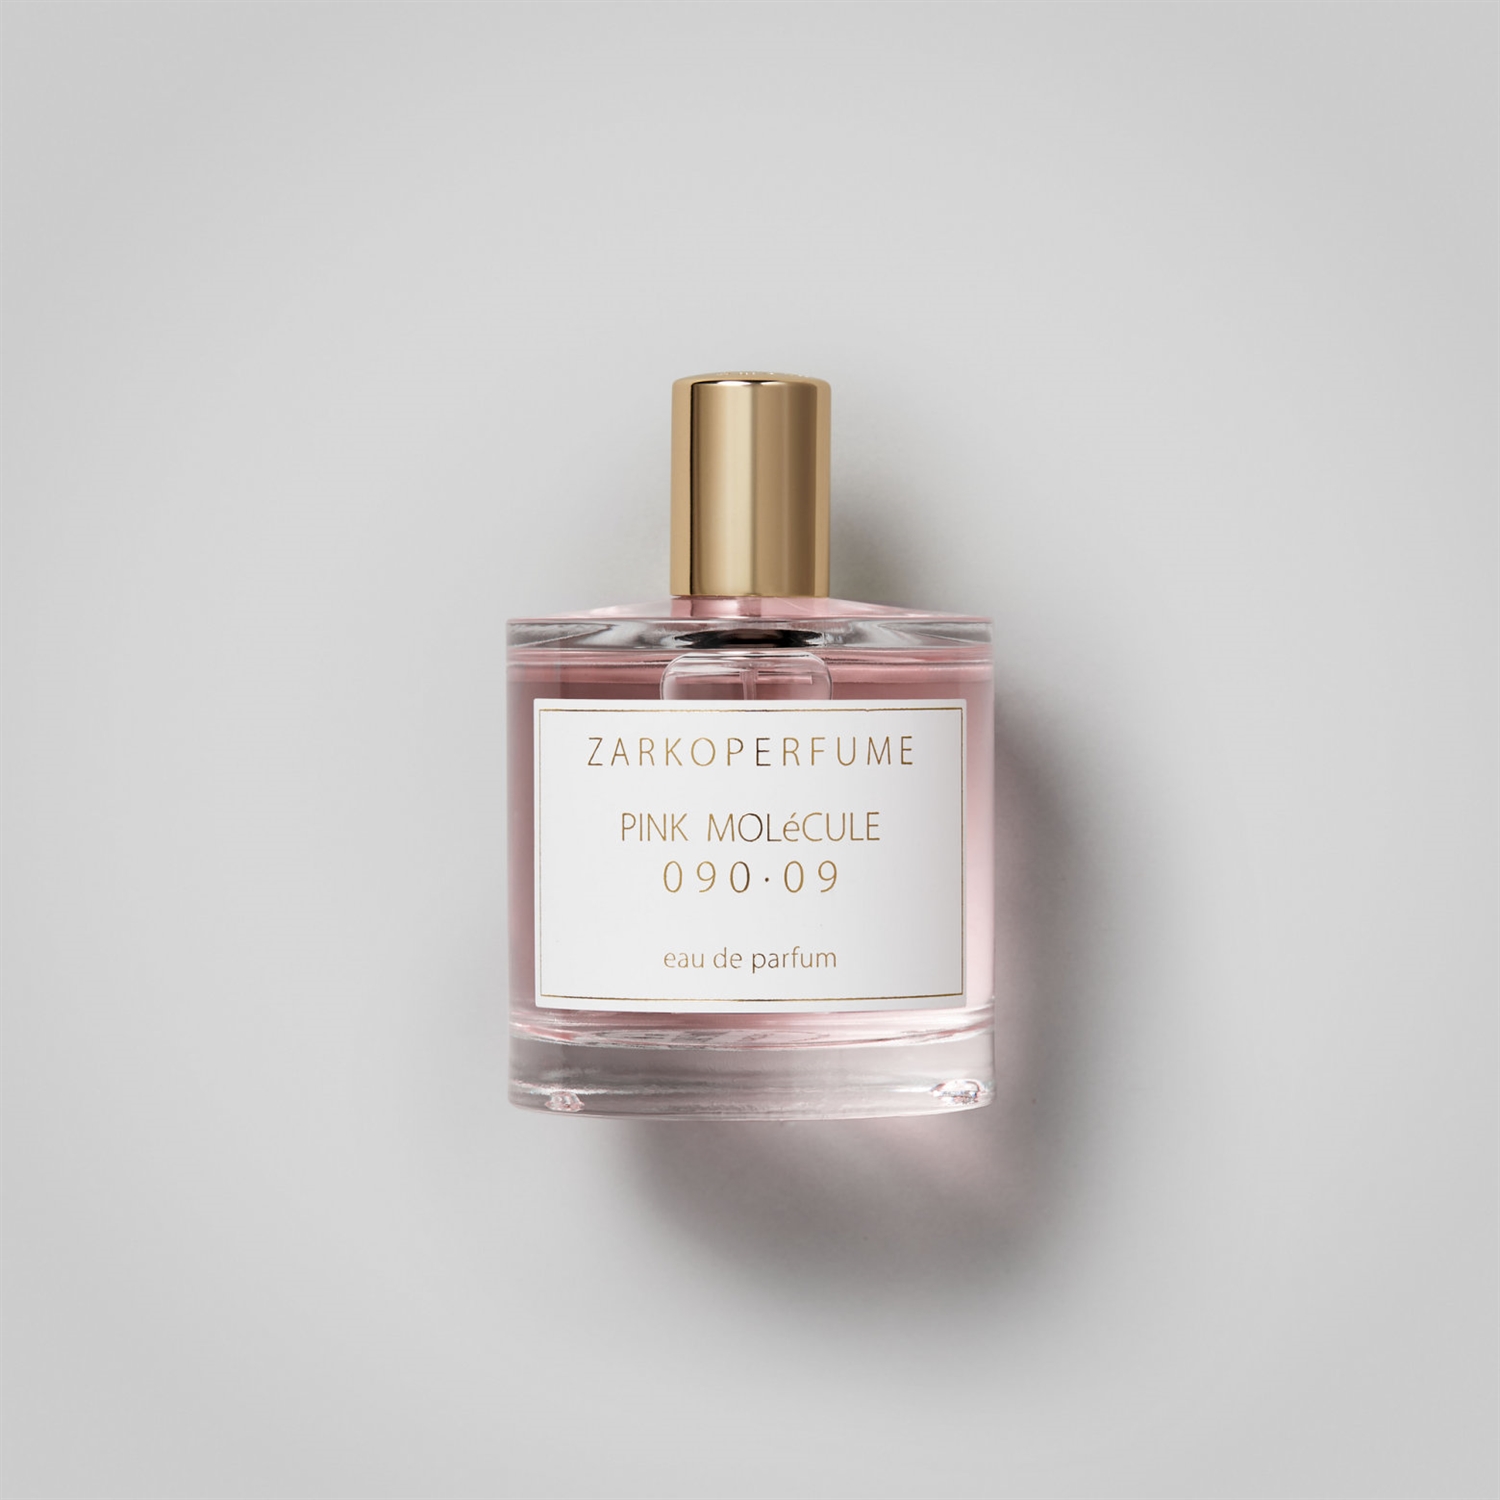 tennis storm Ved navn Zarkoperfume Pink Molécule Eau de Parfume |Shop her →